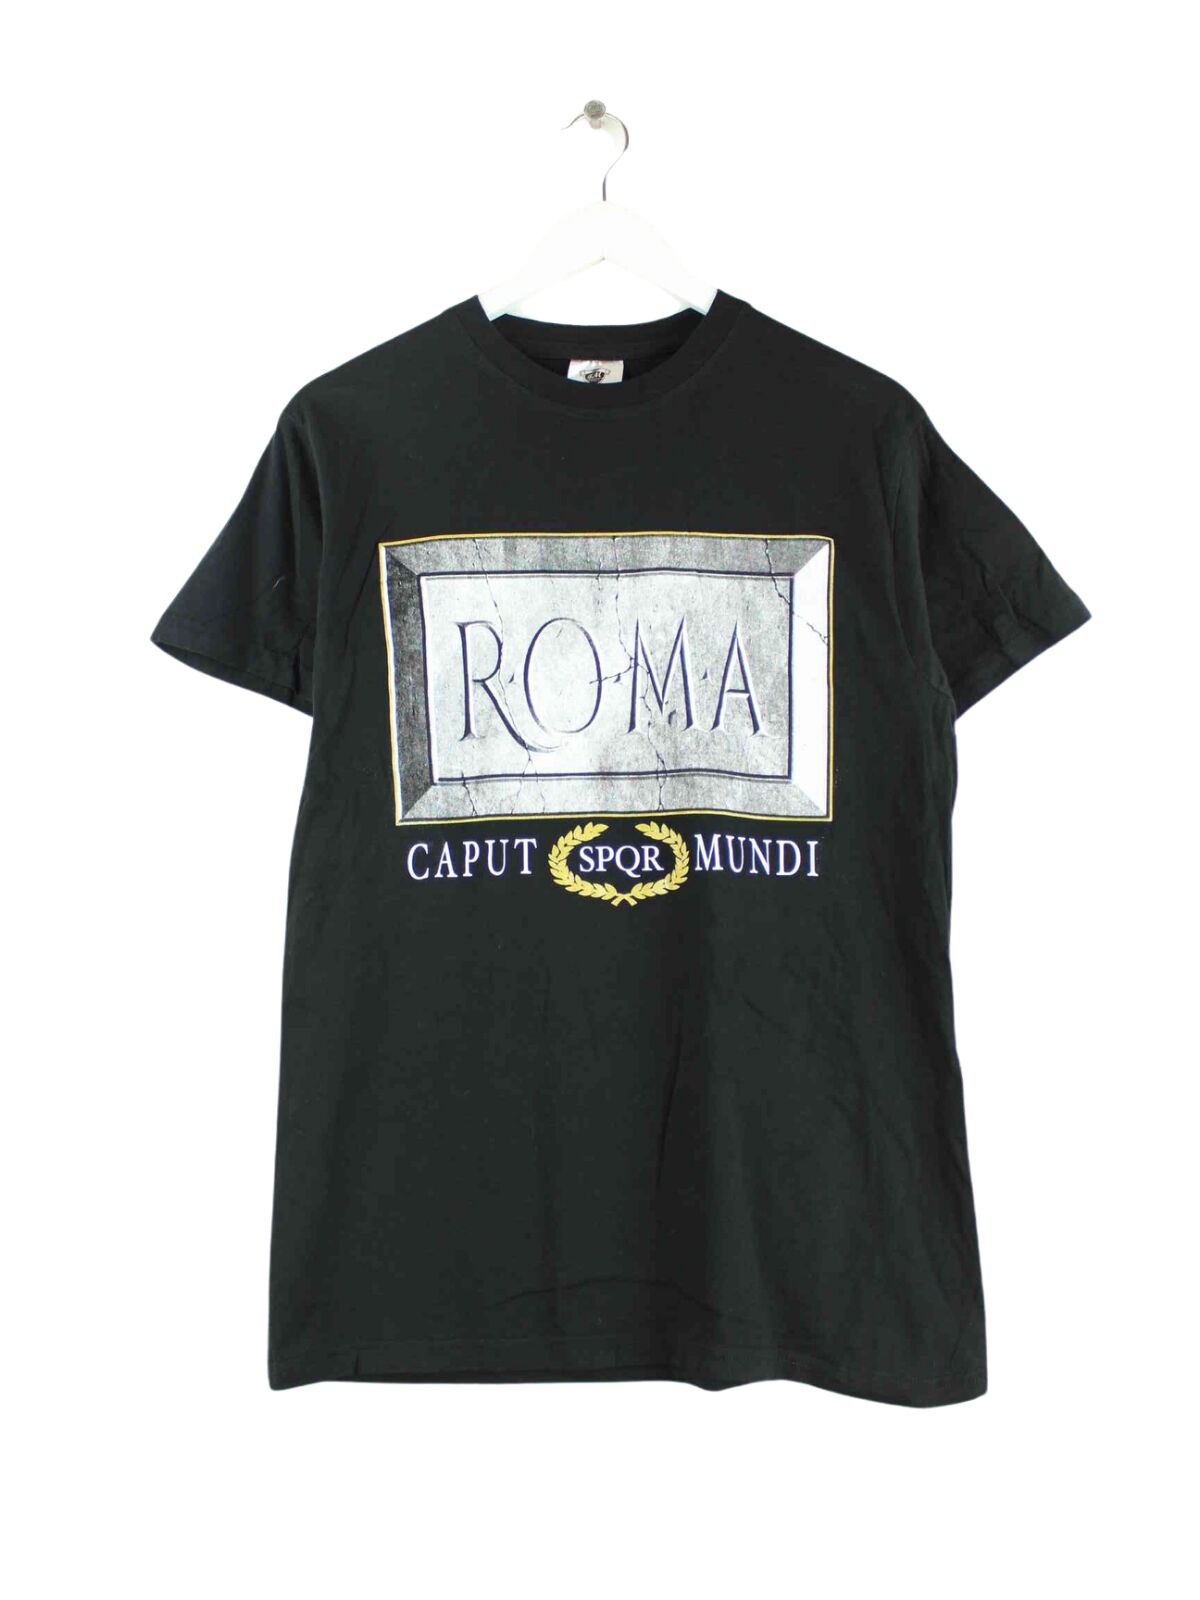 Vintage Roma Caput Mundi Print T-Shirt Schwarz S (front image)